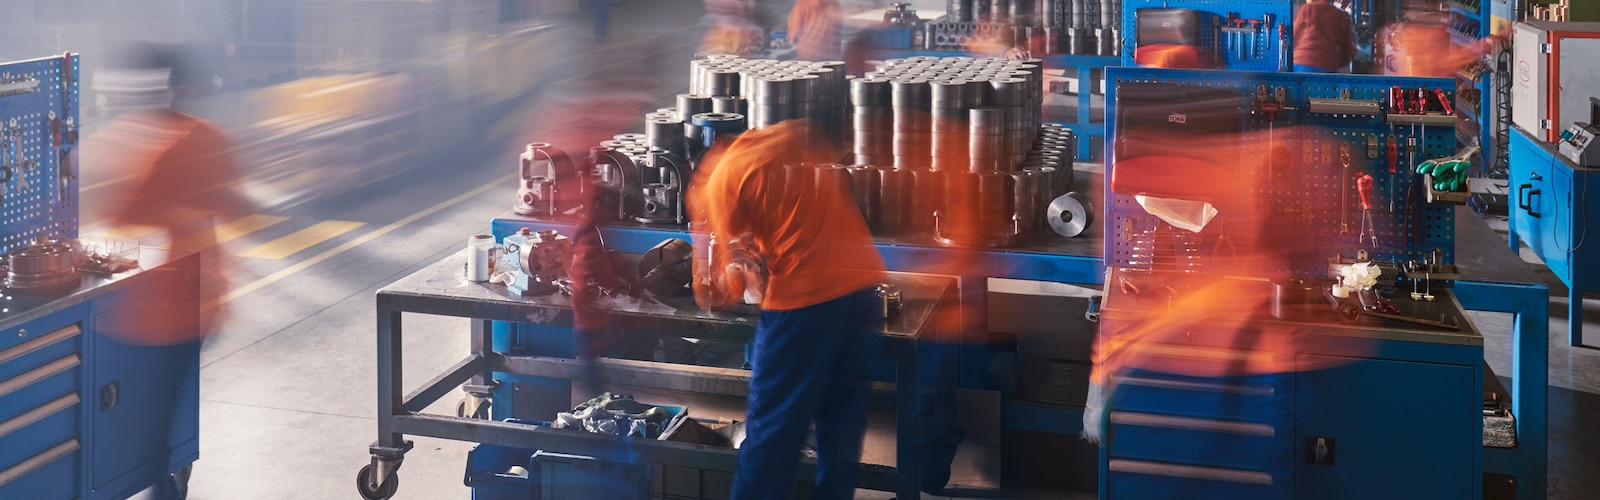 Tork, en timelapse-bild visar fabriksarbetare i en hektisk industrimiljö